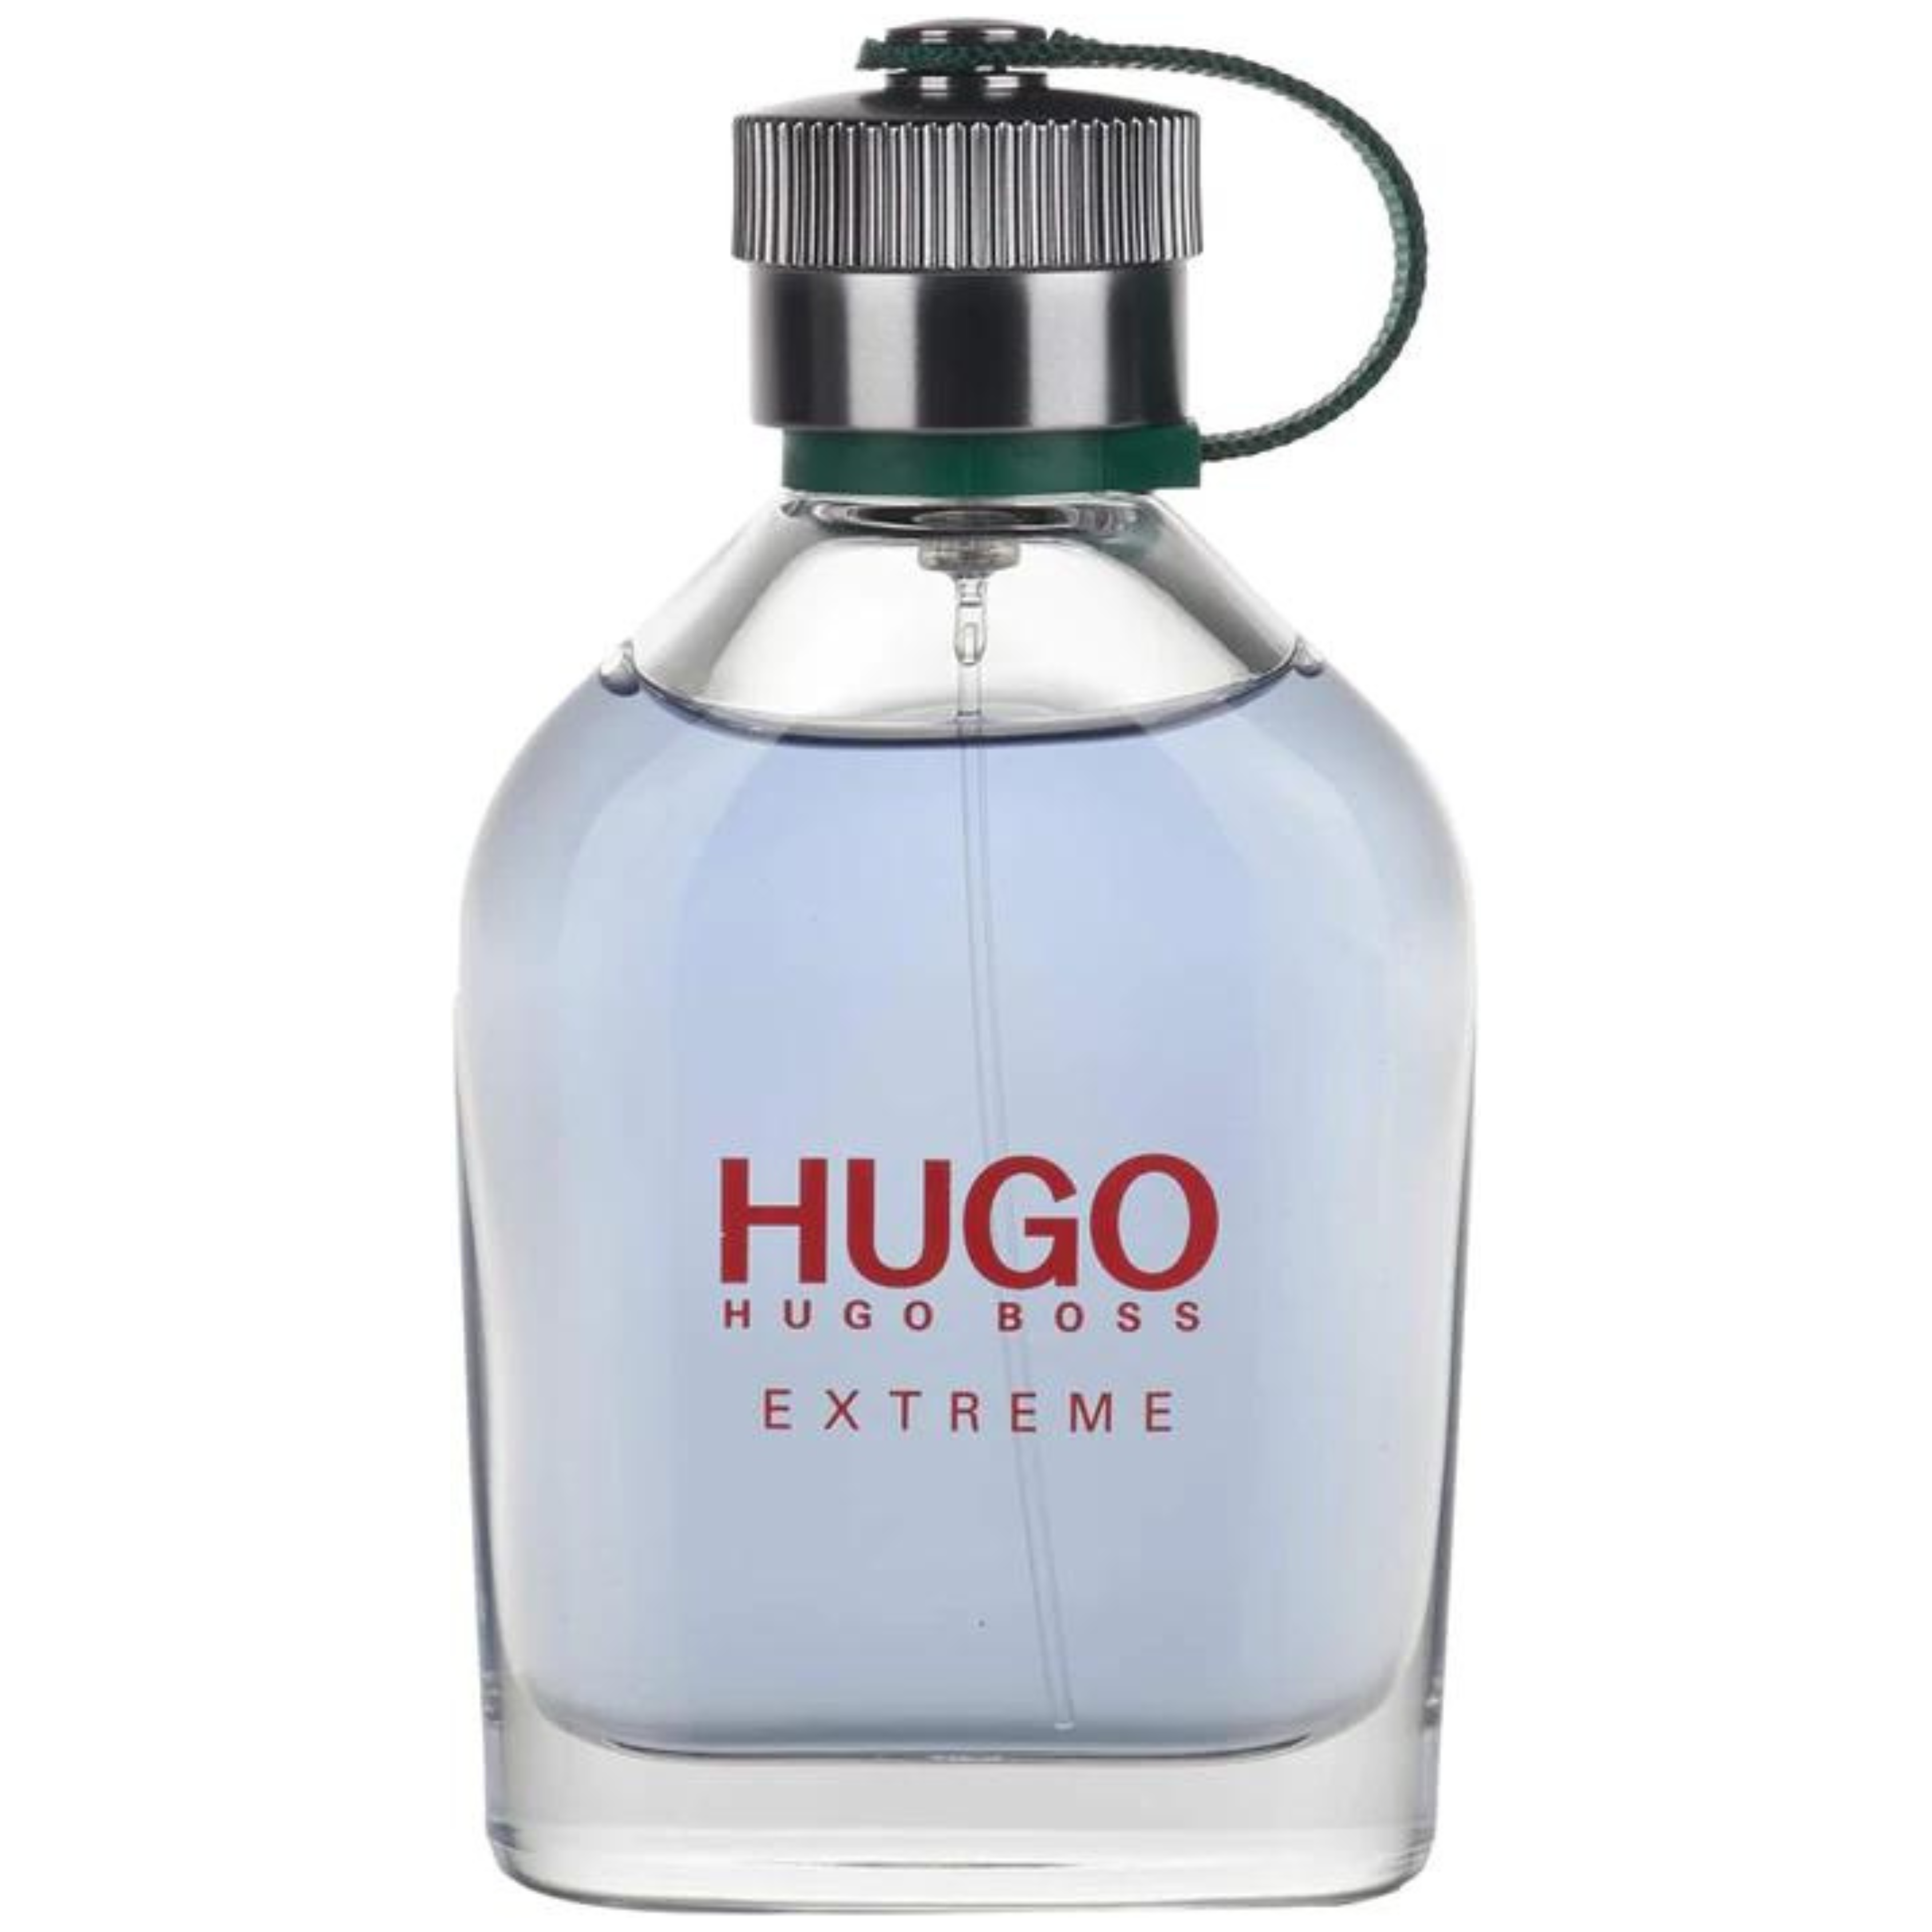 Hugo by Hugo Boss for Men Eau de Toilette 100ml